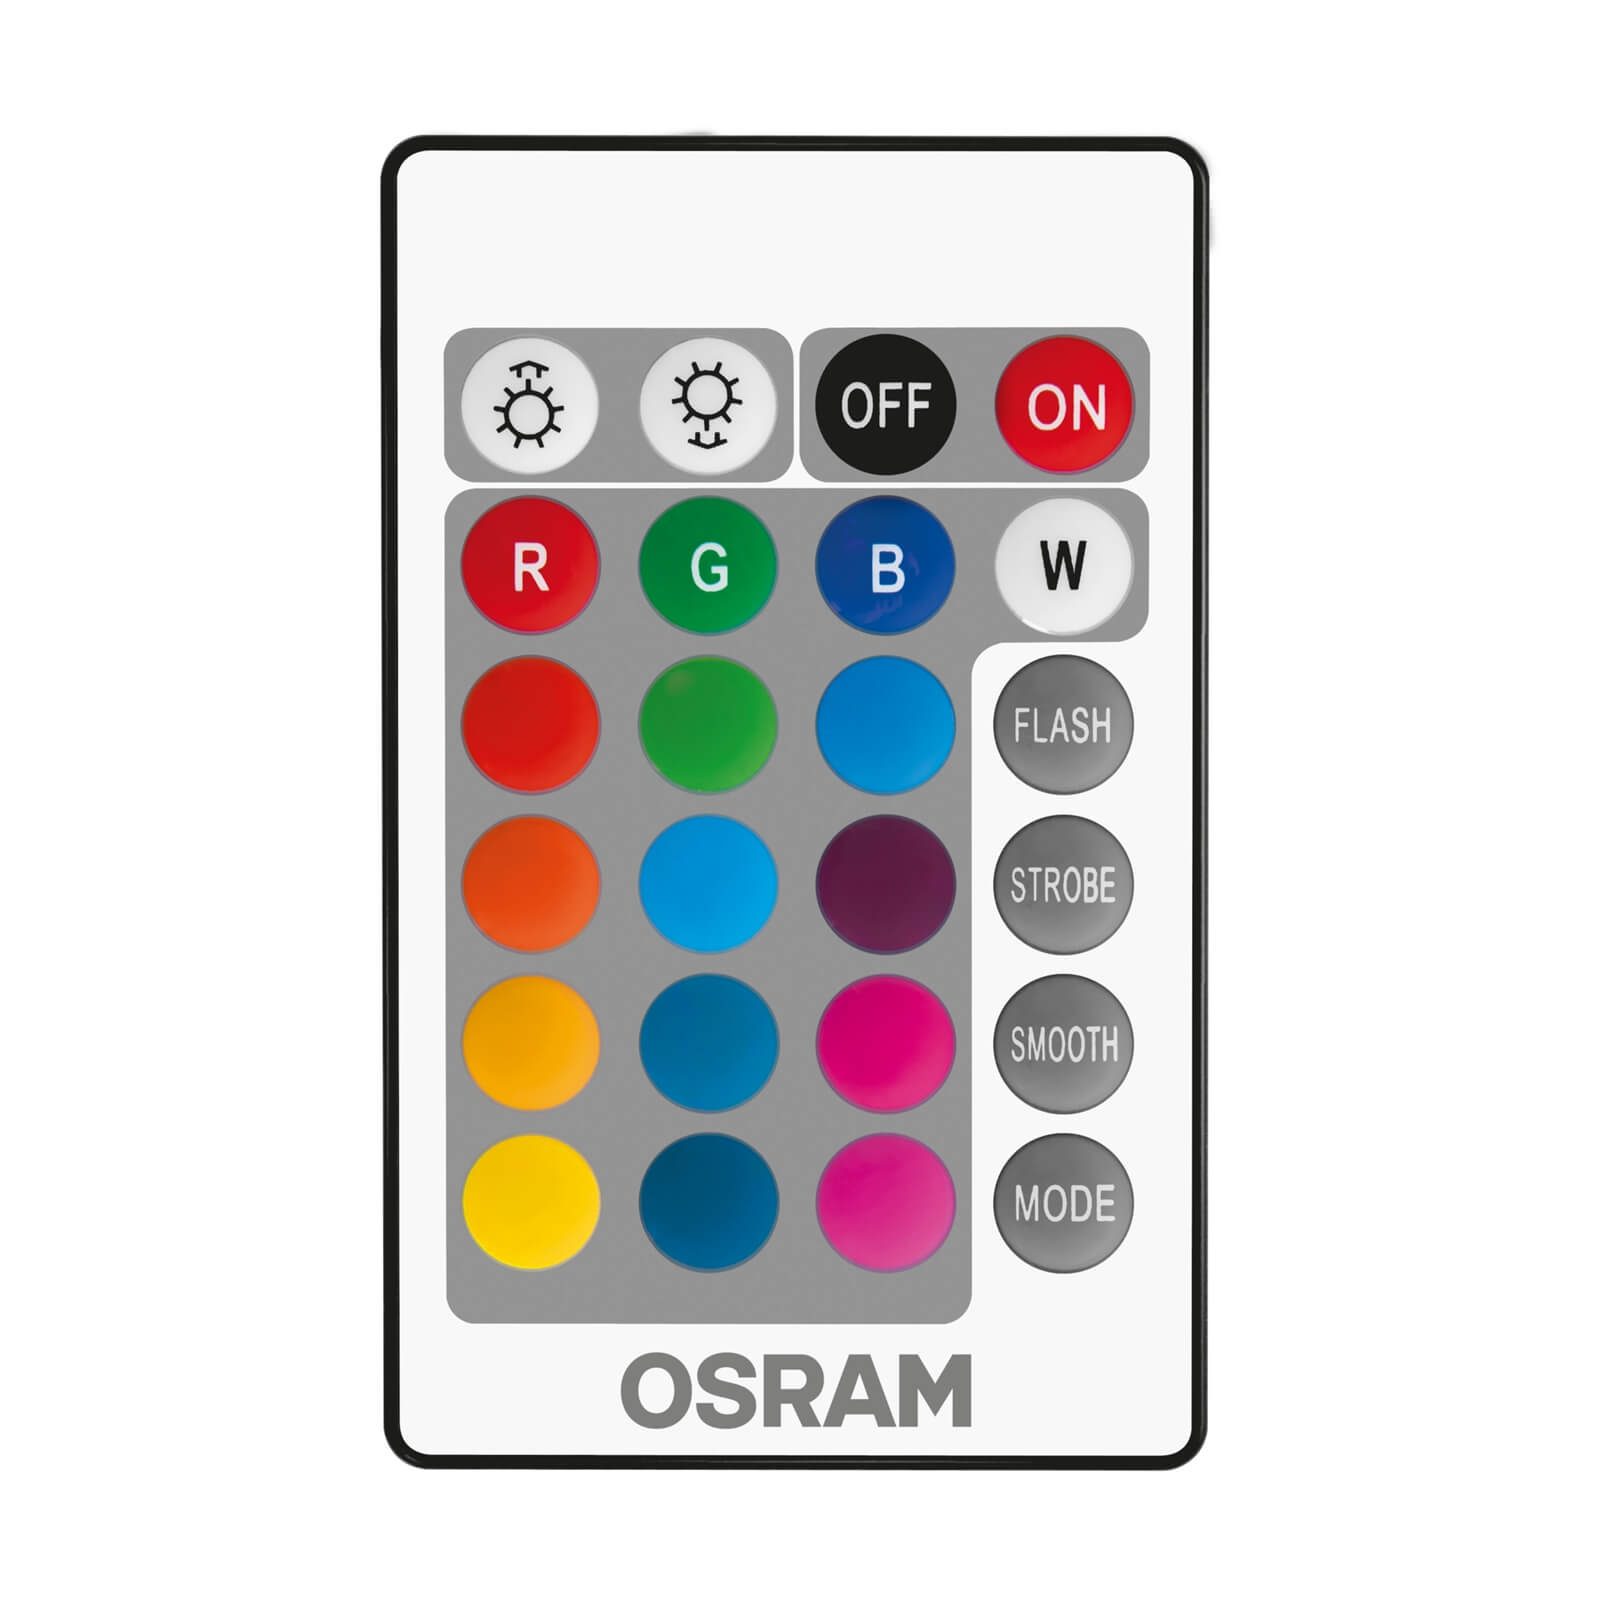 Osram LED Candle 40W RGBw Remote SES Light Bulb - 2 pack